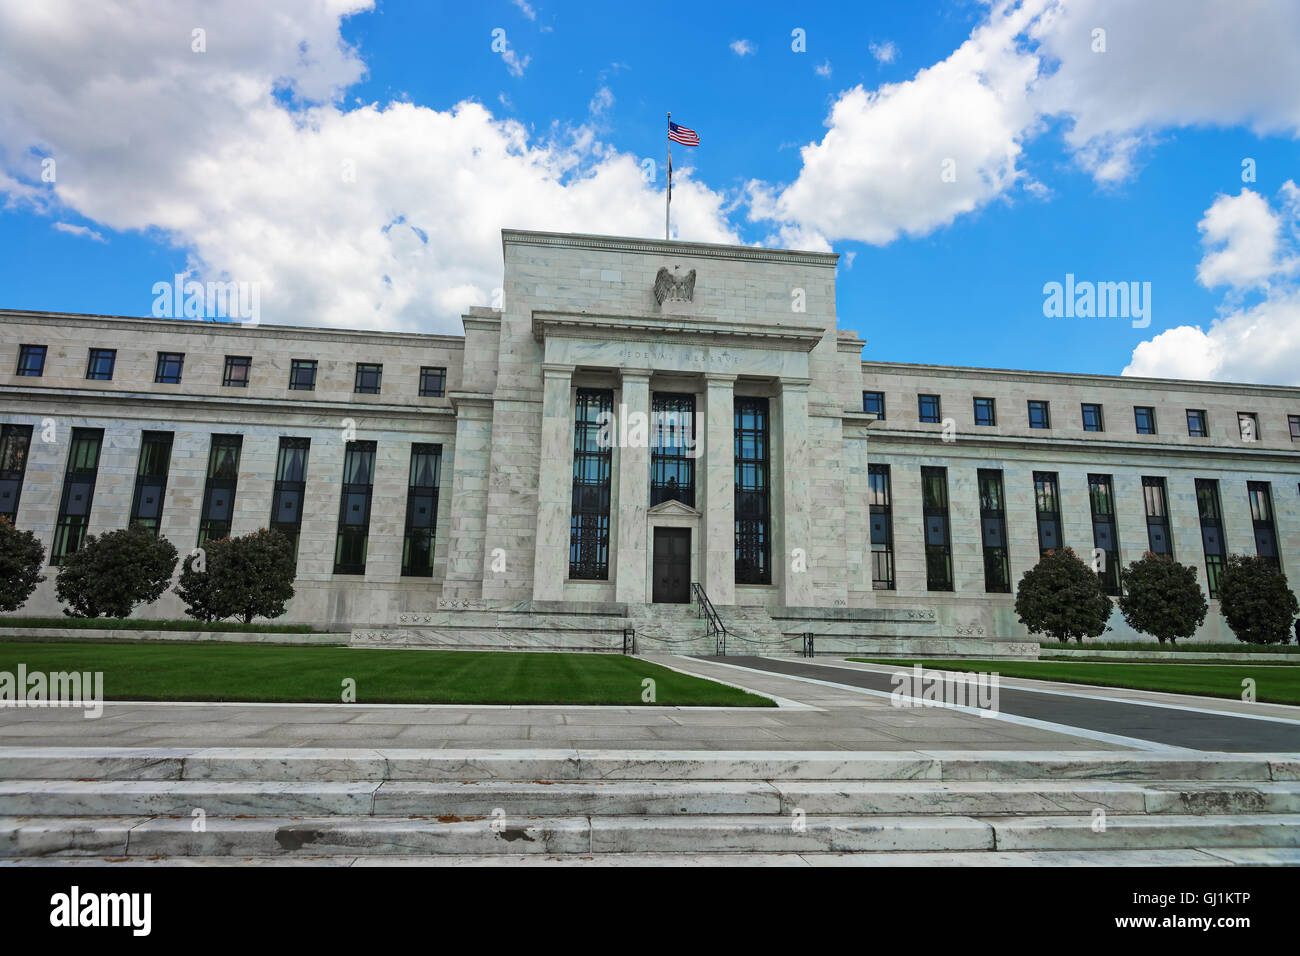 Eccles Building befindet sich in Washington D.C., USA. Es ist der Sitz des Board of Governors des Federal Reserve System. Zuvor hieß es die Federal Reserve Building. Stockfoto